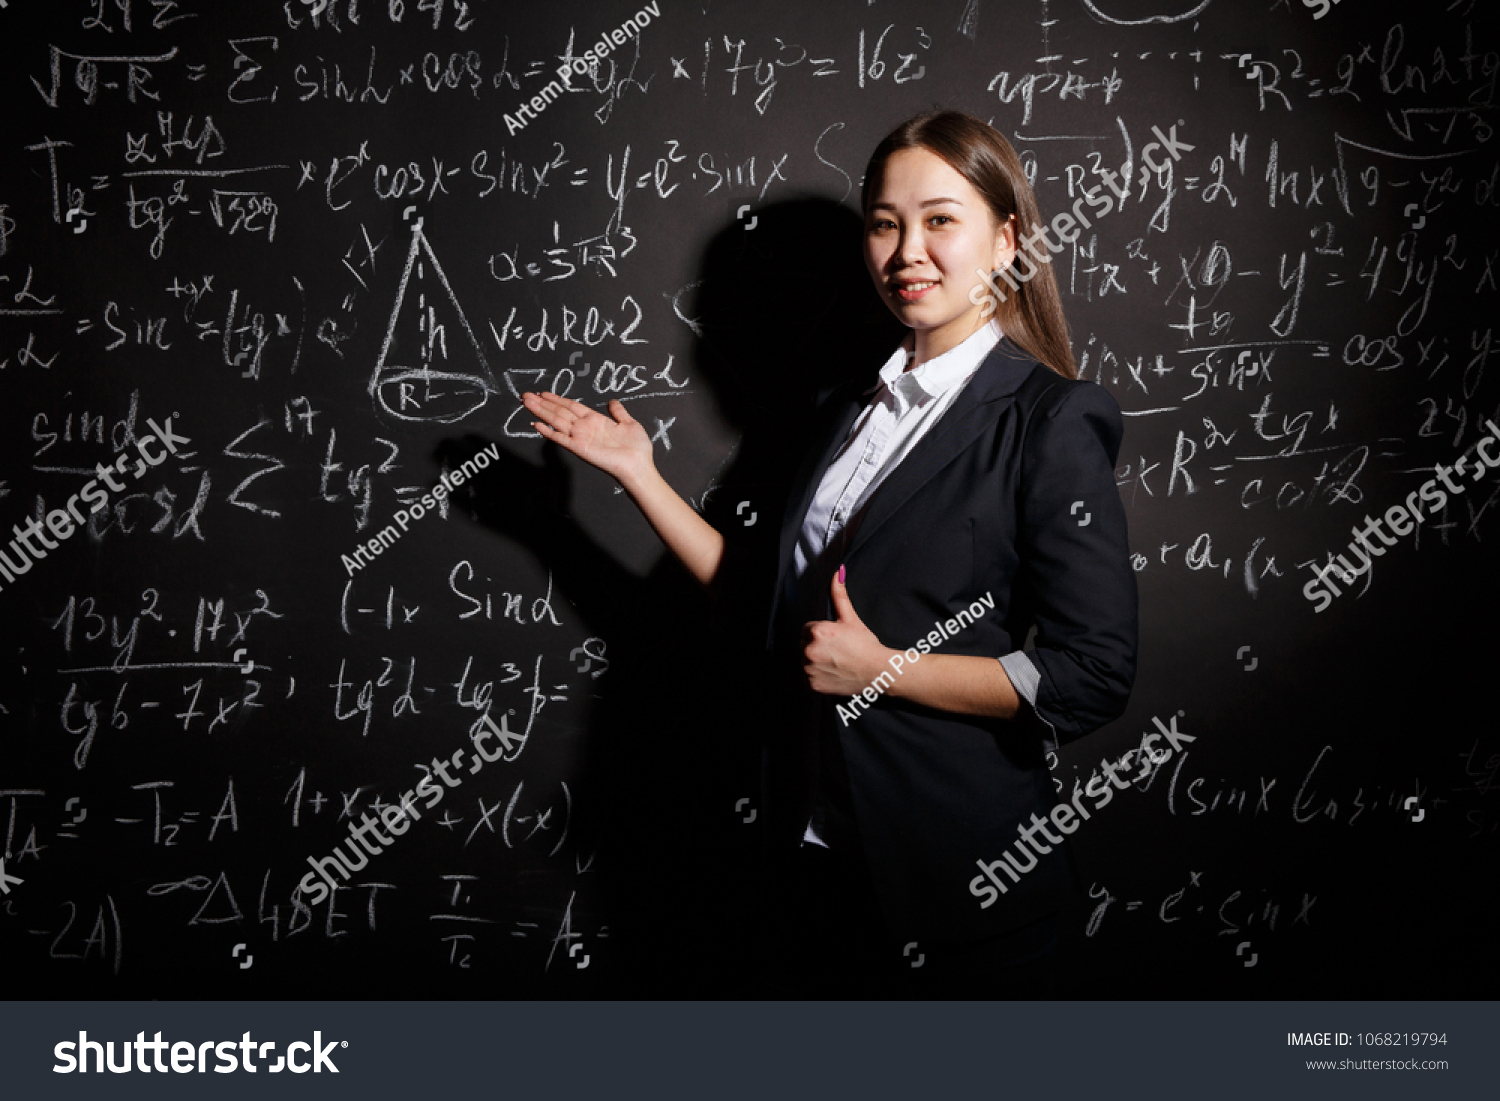 School Teacher Stands Near Board Stock Photo Edit Now 1068219794